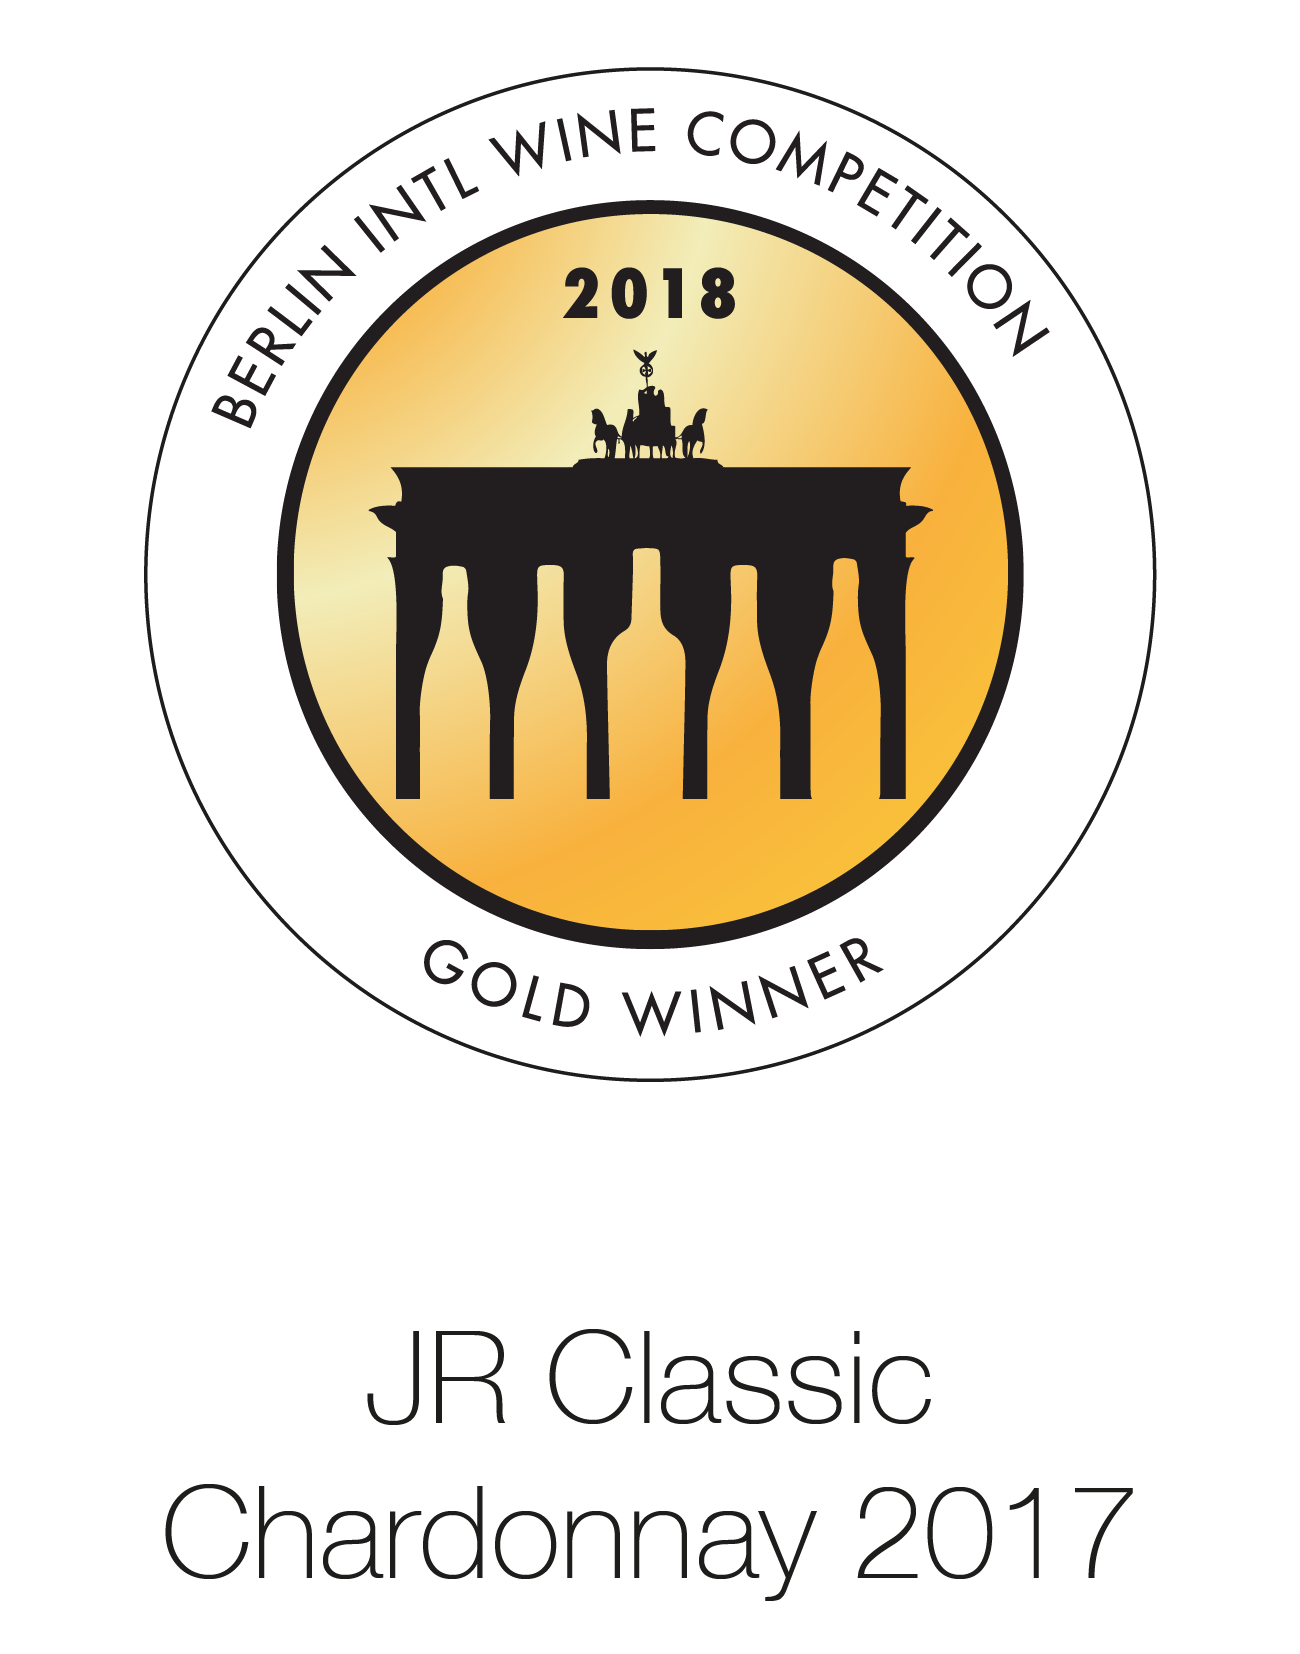 JR Classic - Chardonnay 2017 - Berlin International Wine Competition 2018